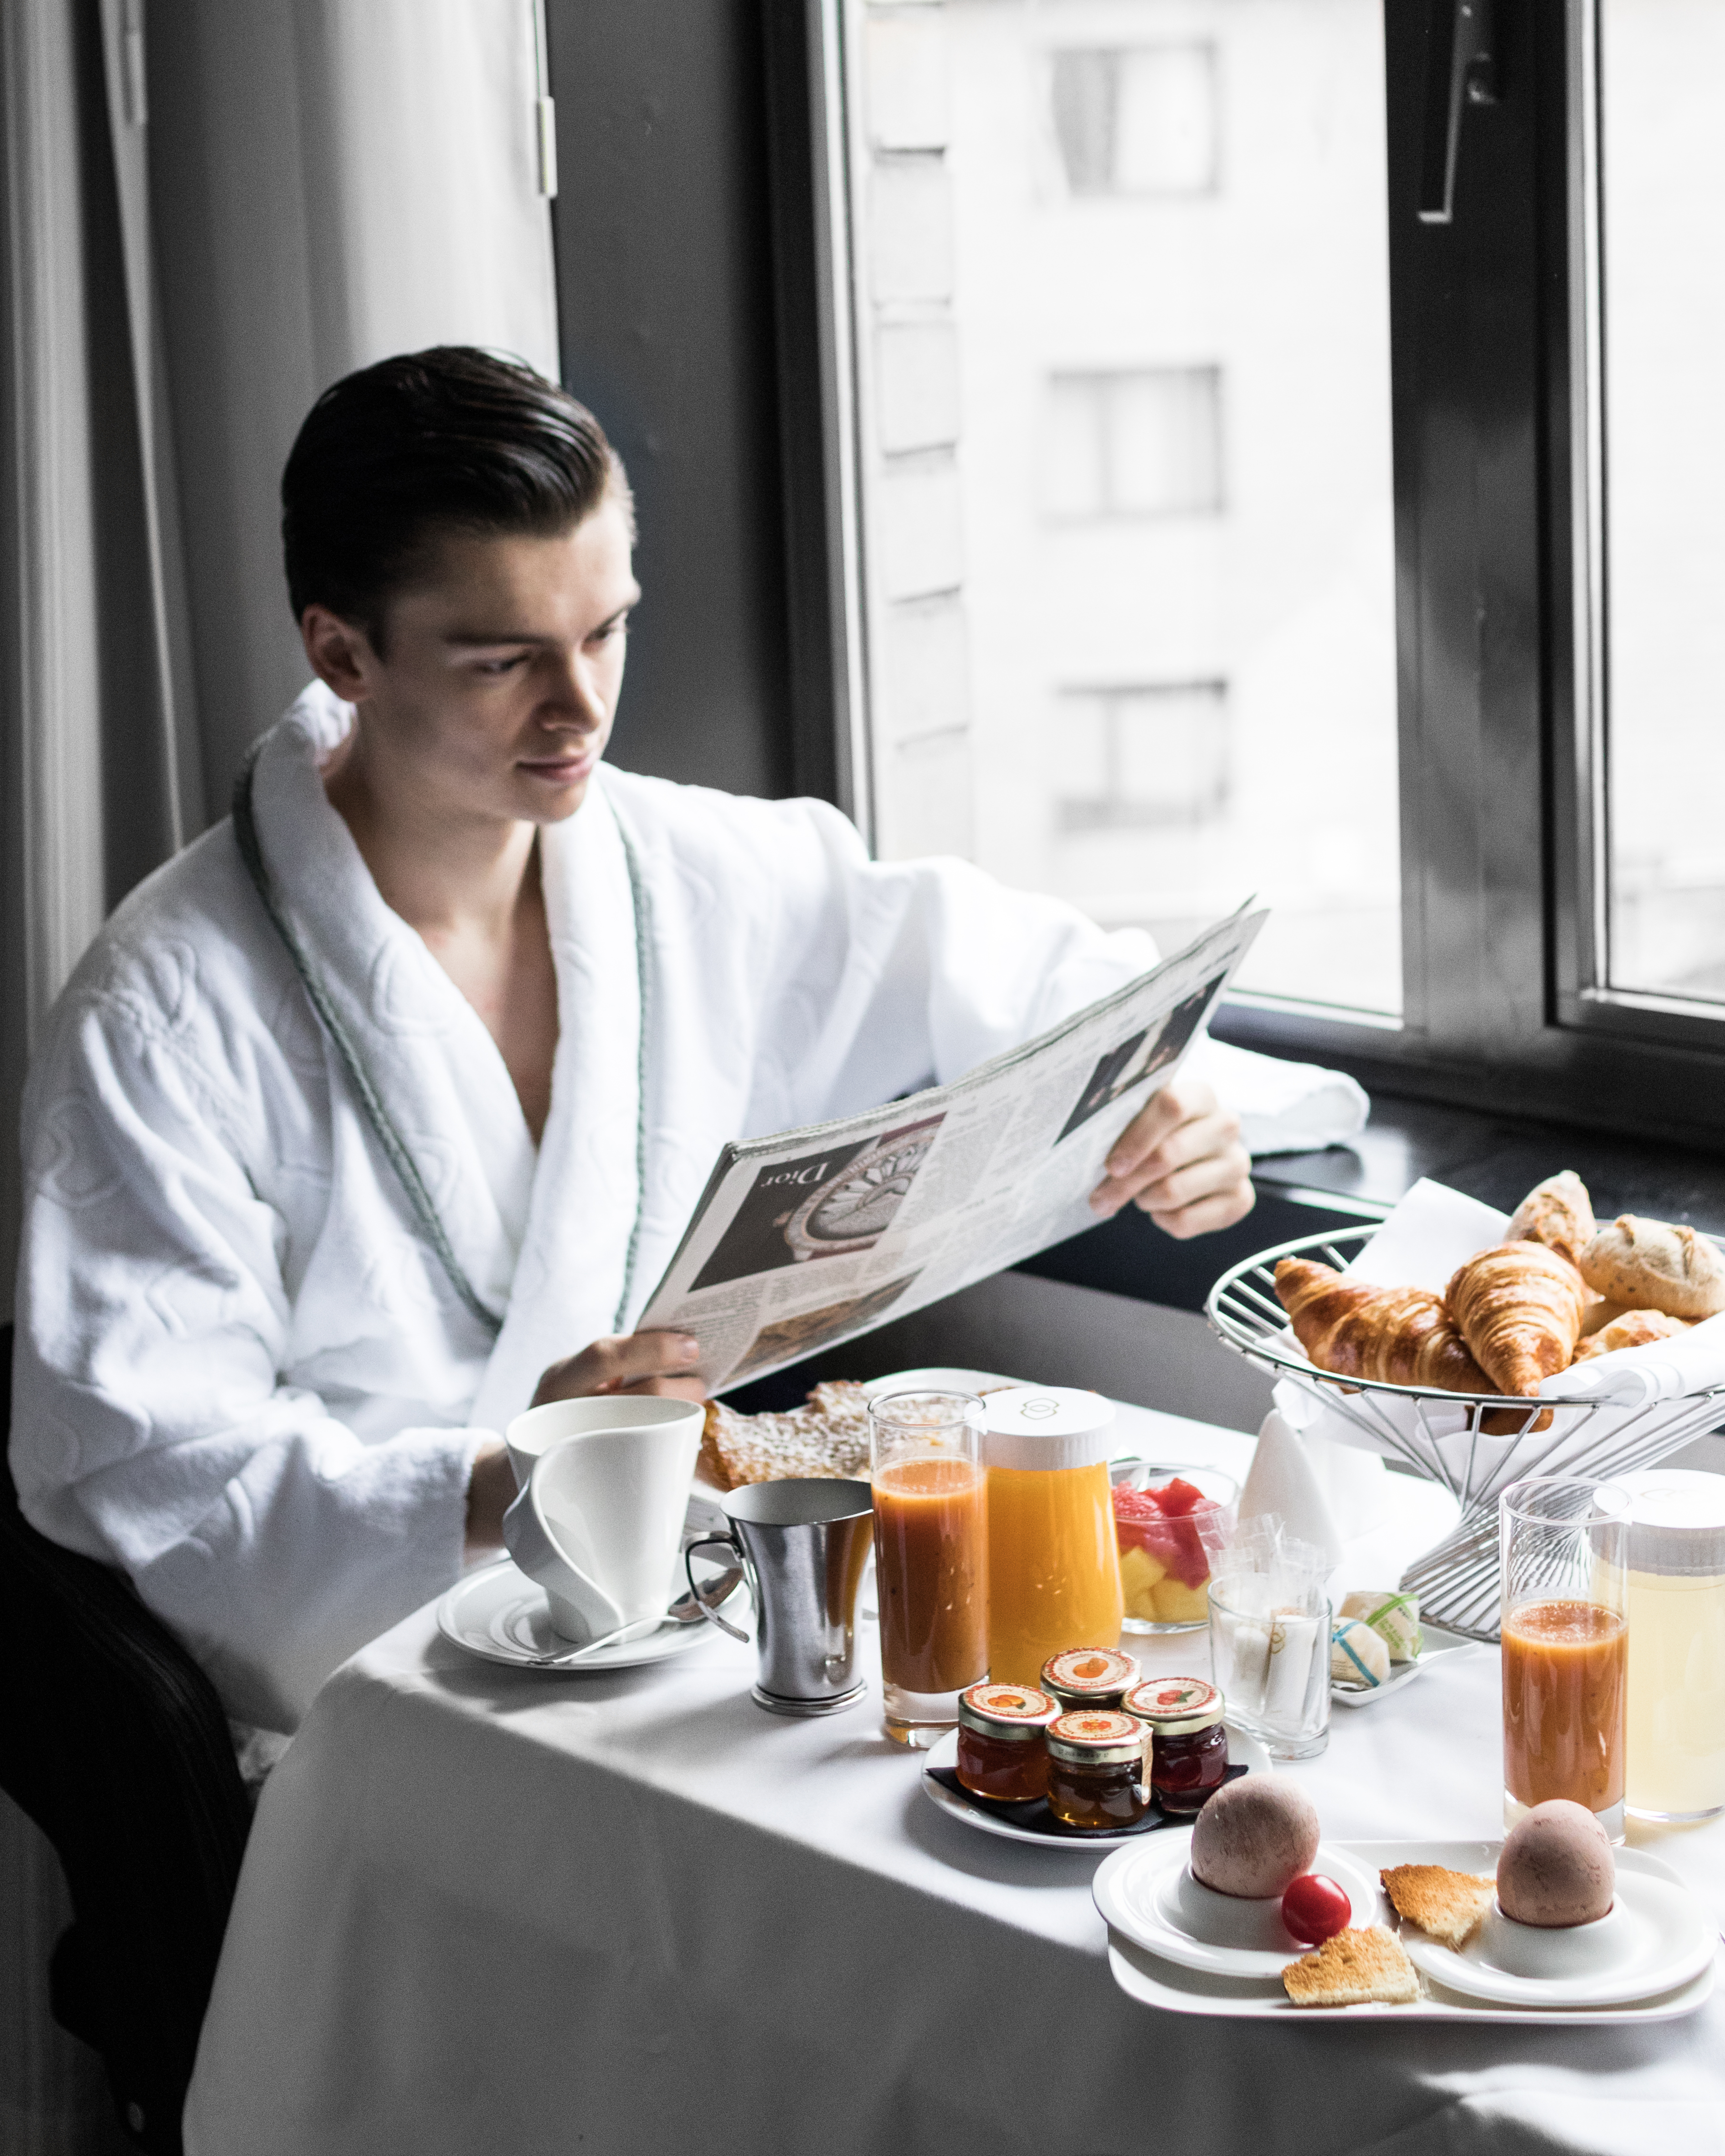 Mathias le fevre - sofitel le louise brussels breakfast room service gentleman luxury hotel